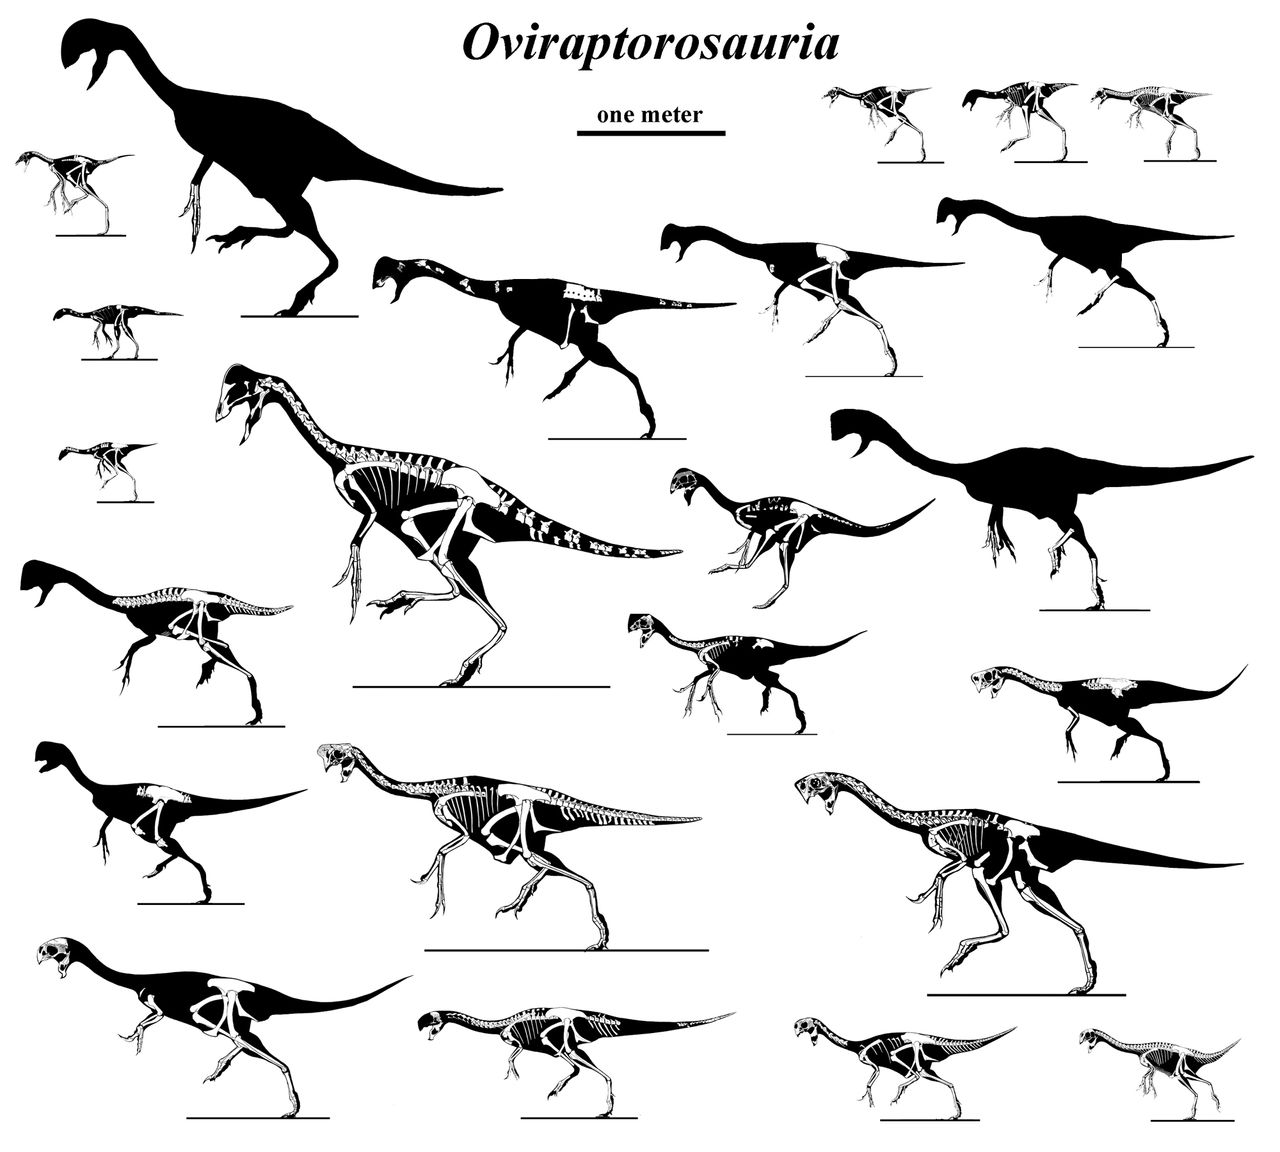 A Panoply of Oviraptorosaurs